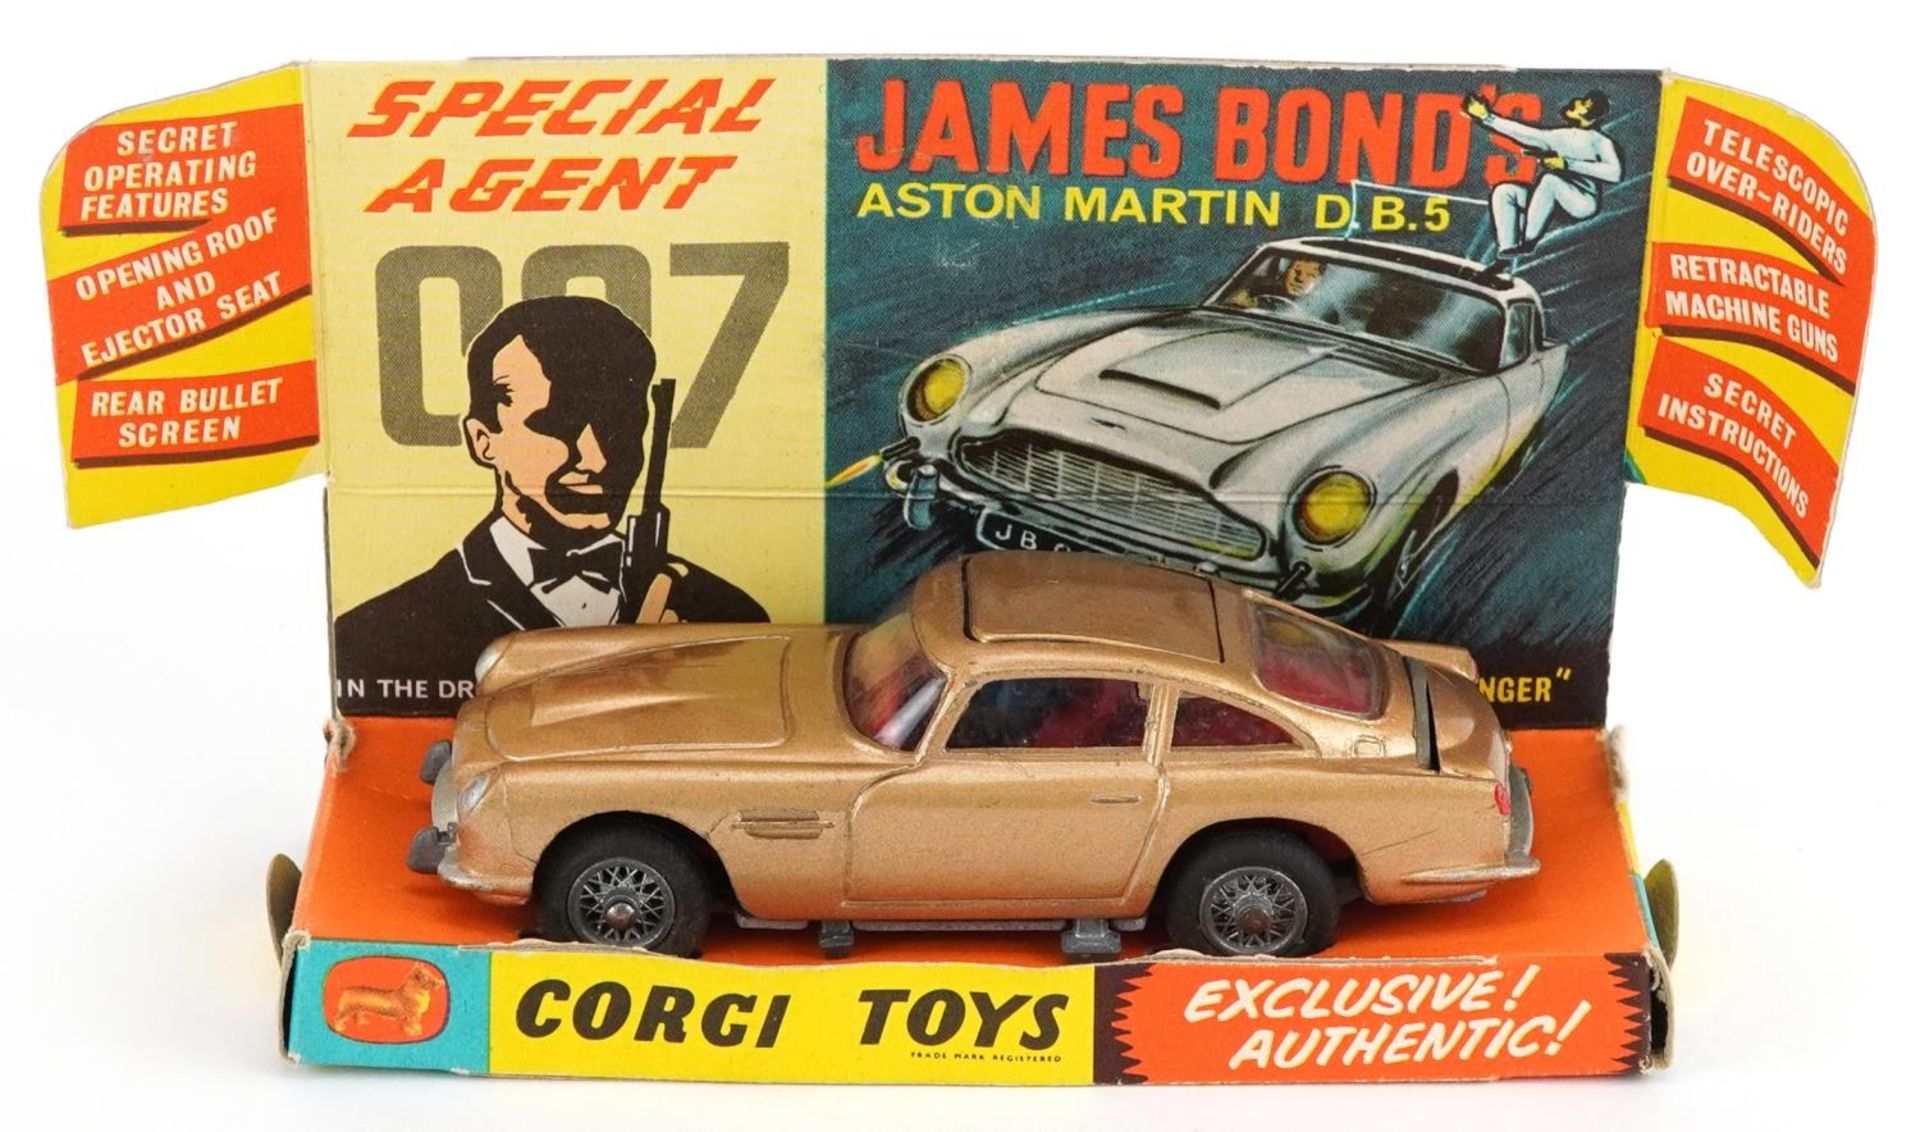 Vintage Corgi Toys diecast Special Agent James Bond's Aston Martin DB5 with box numbered 261 - Bild 2 aus 3